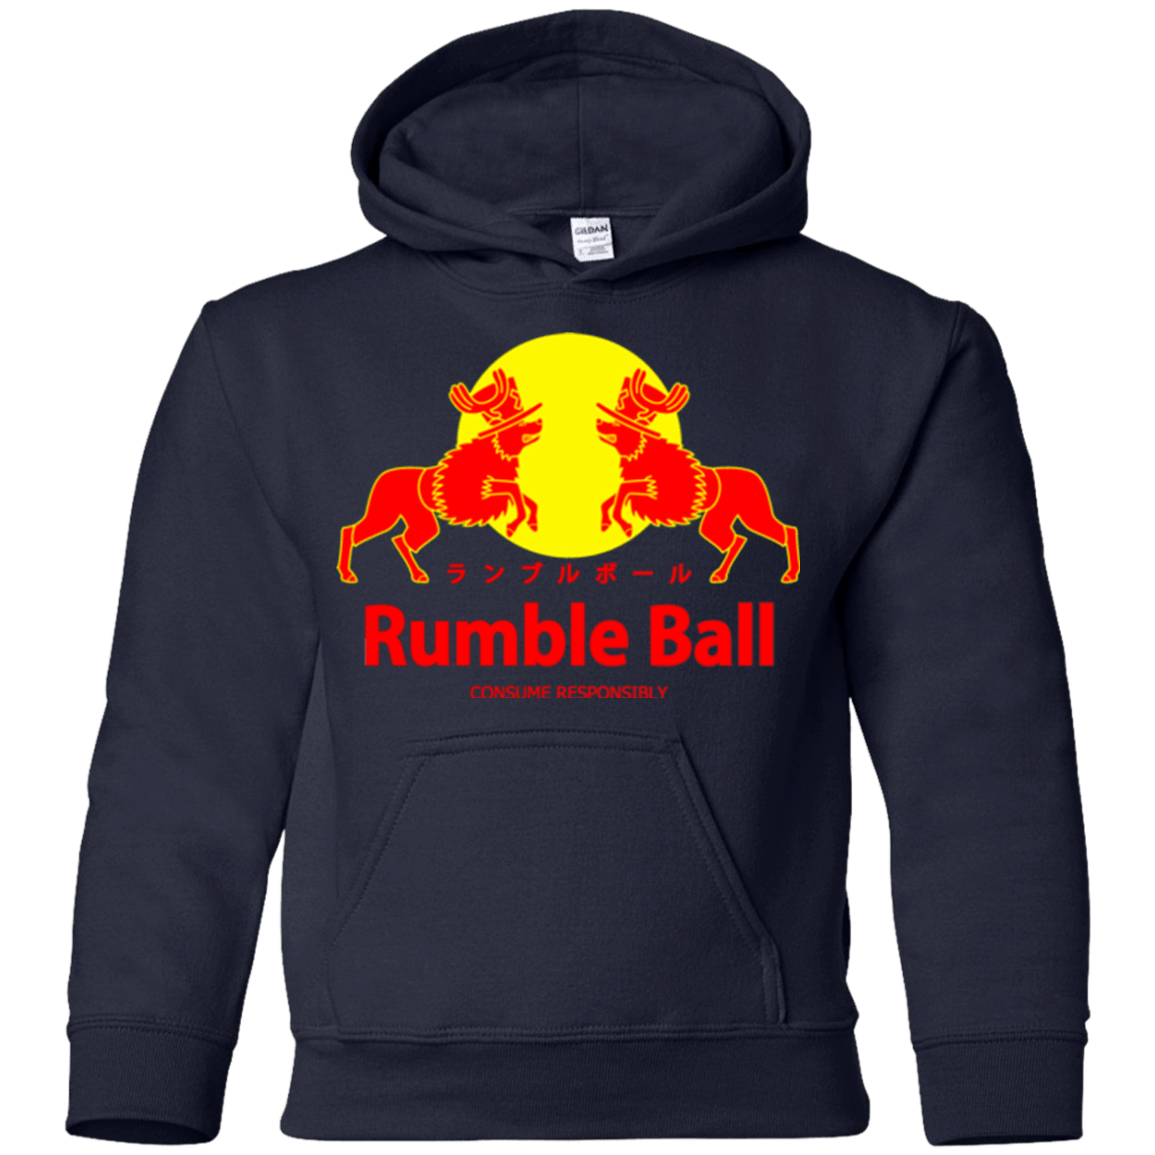 Sweatshirts Navy / YS Rumble Ball Youth Hoodie